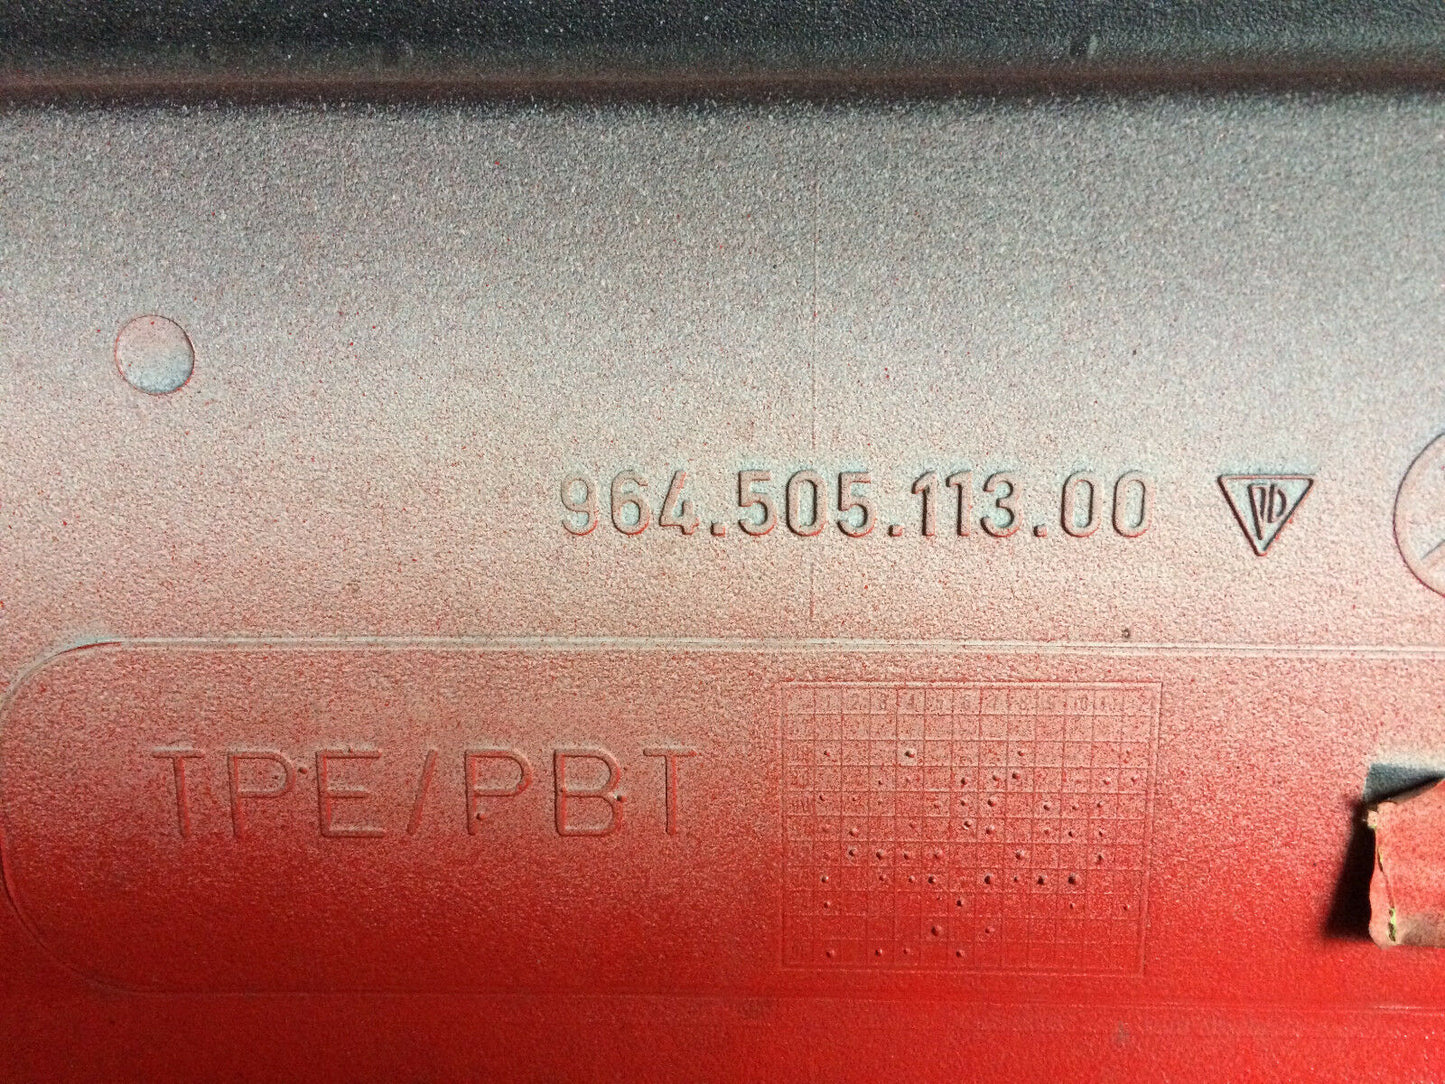 Porsche 911 964 Bj. 89- Front Bumper 96450511300